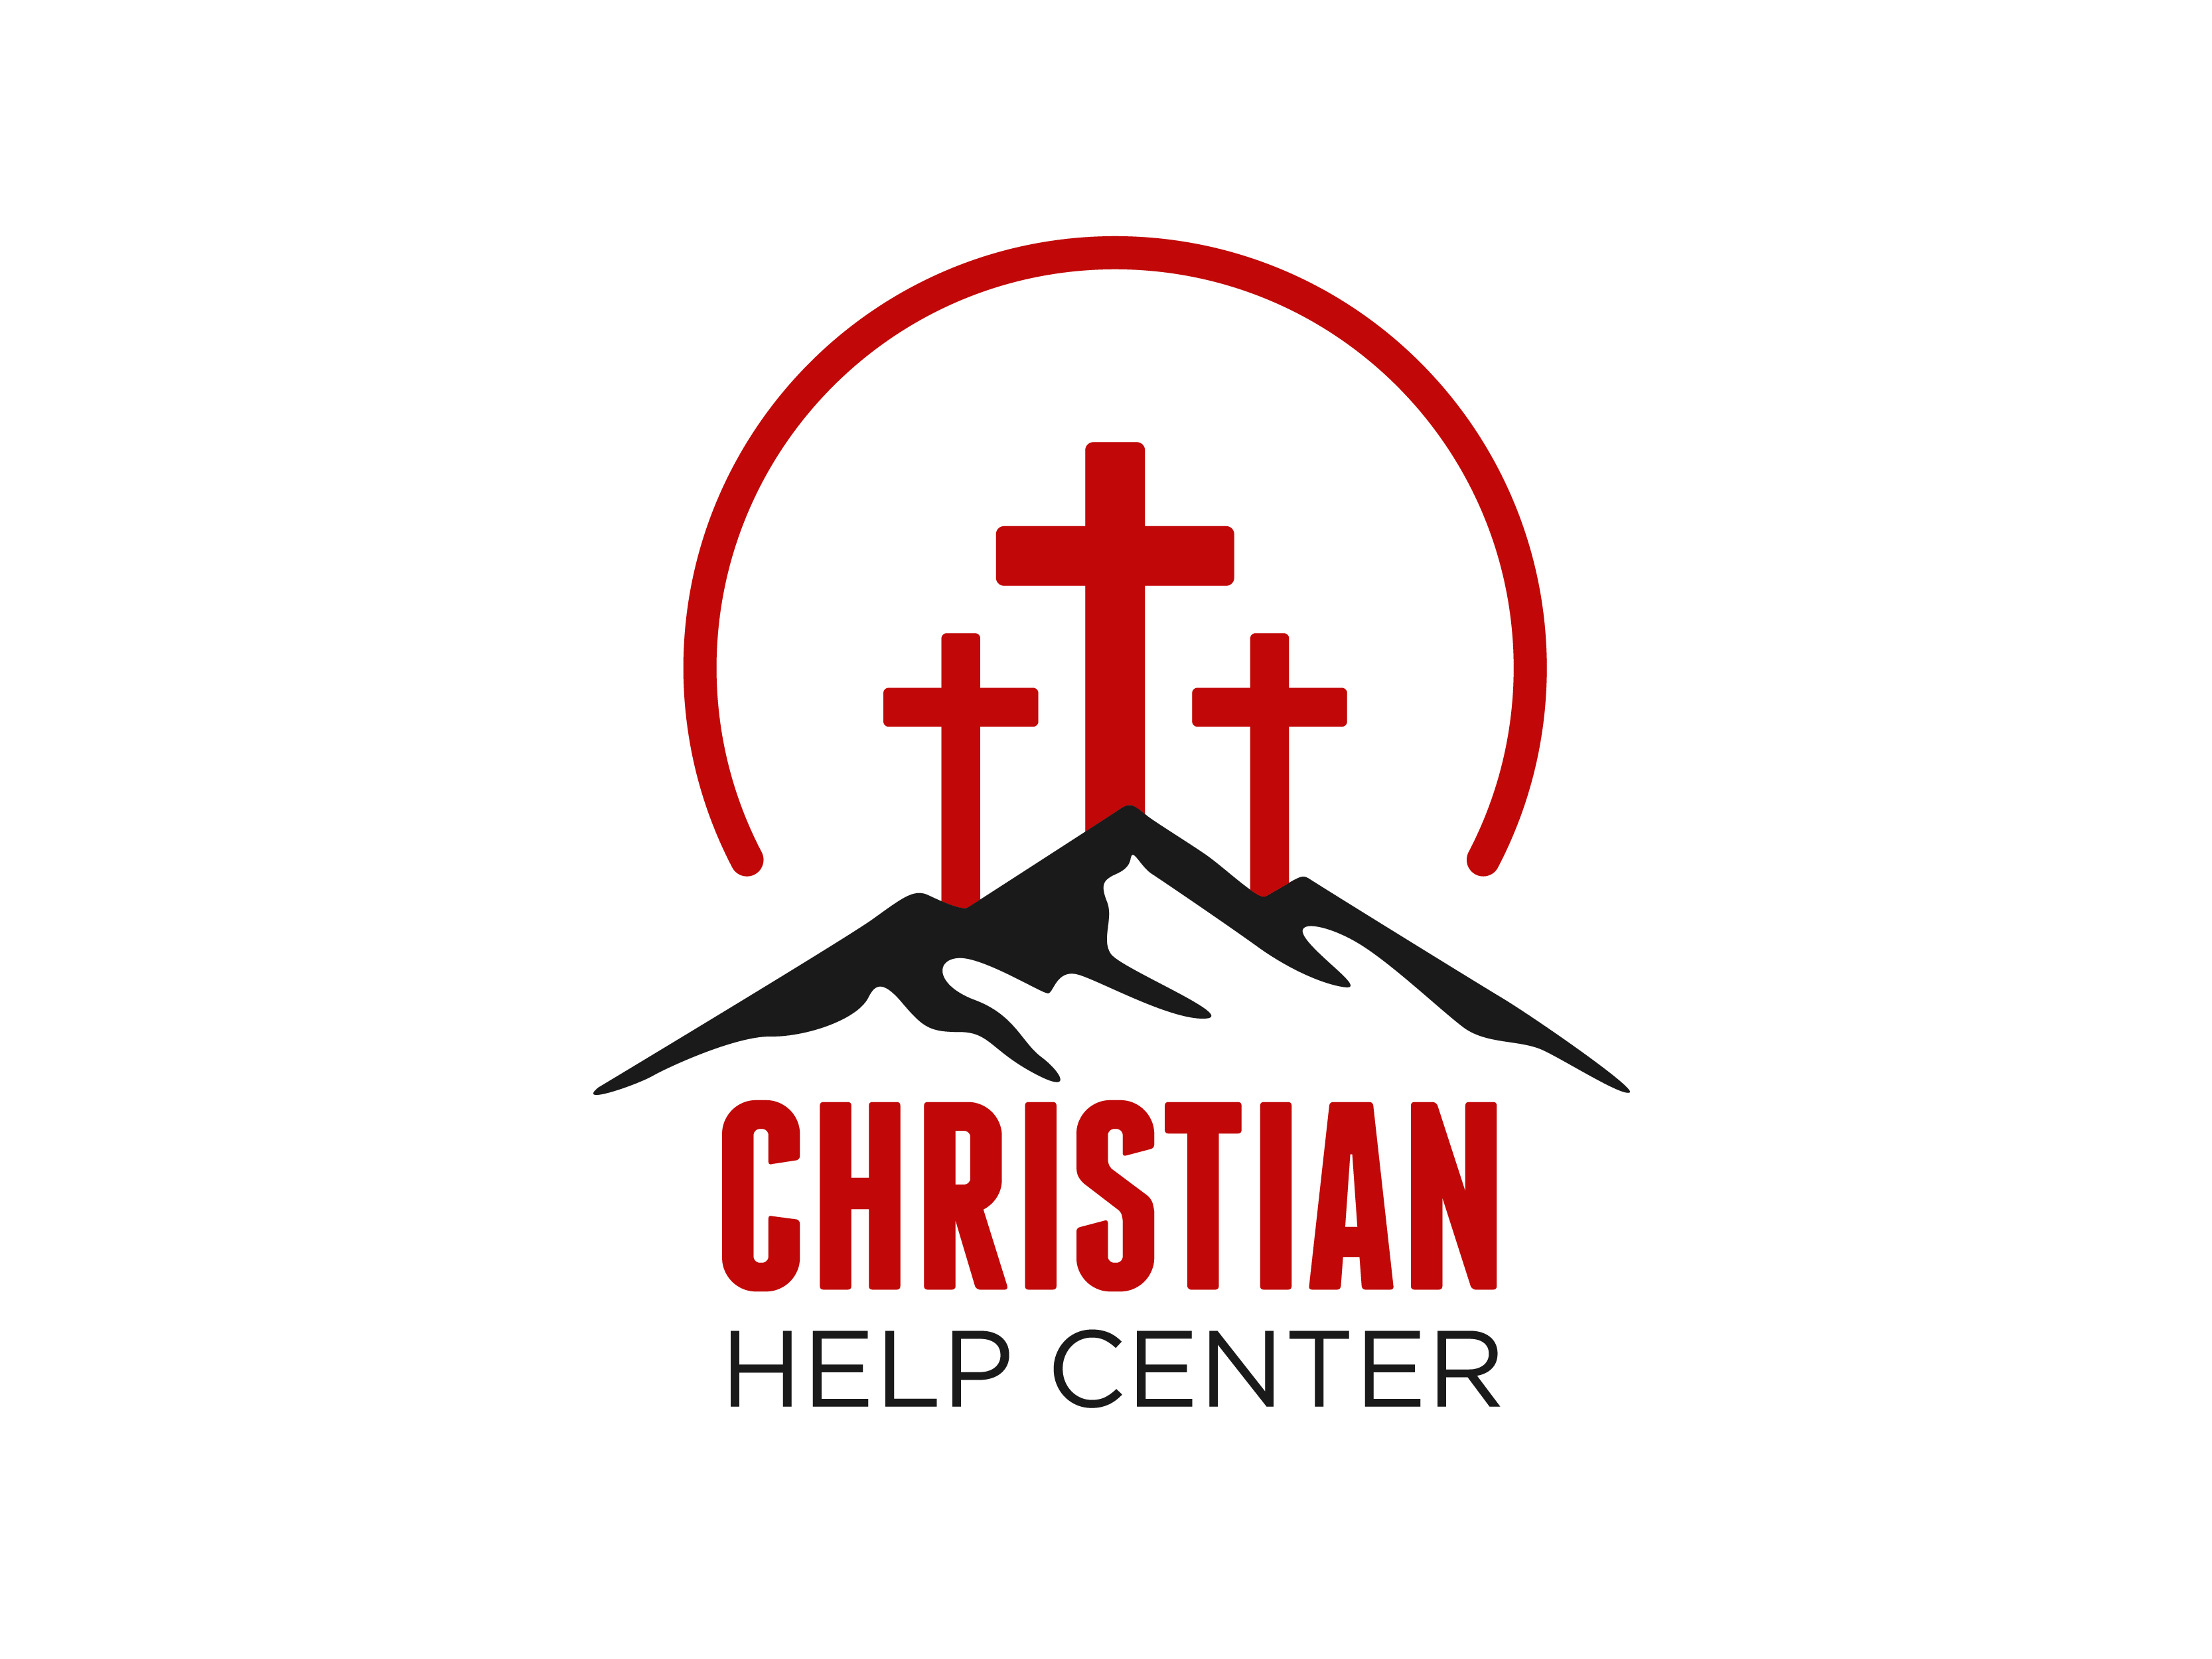 Christian Help Center logo